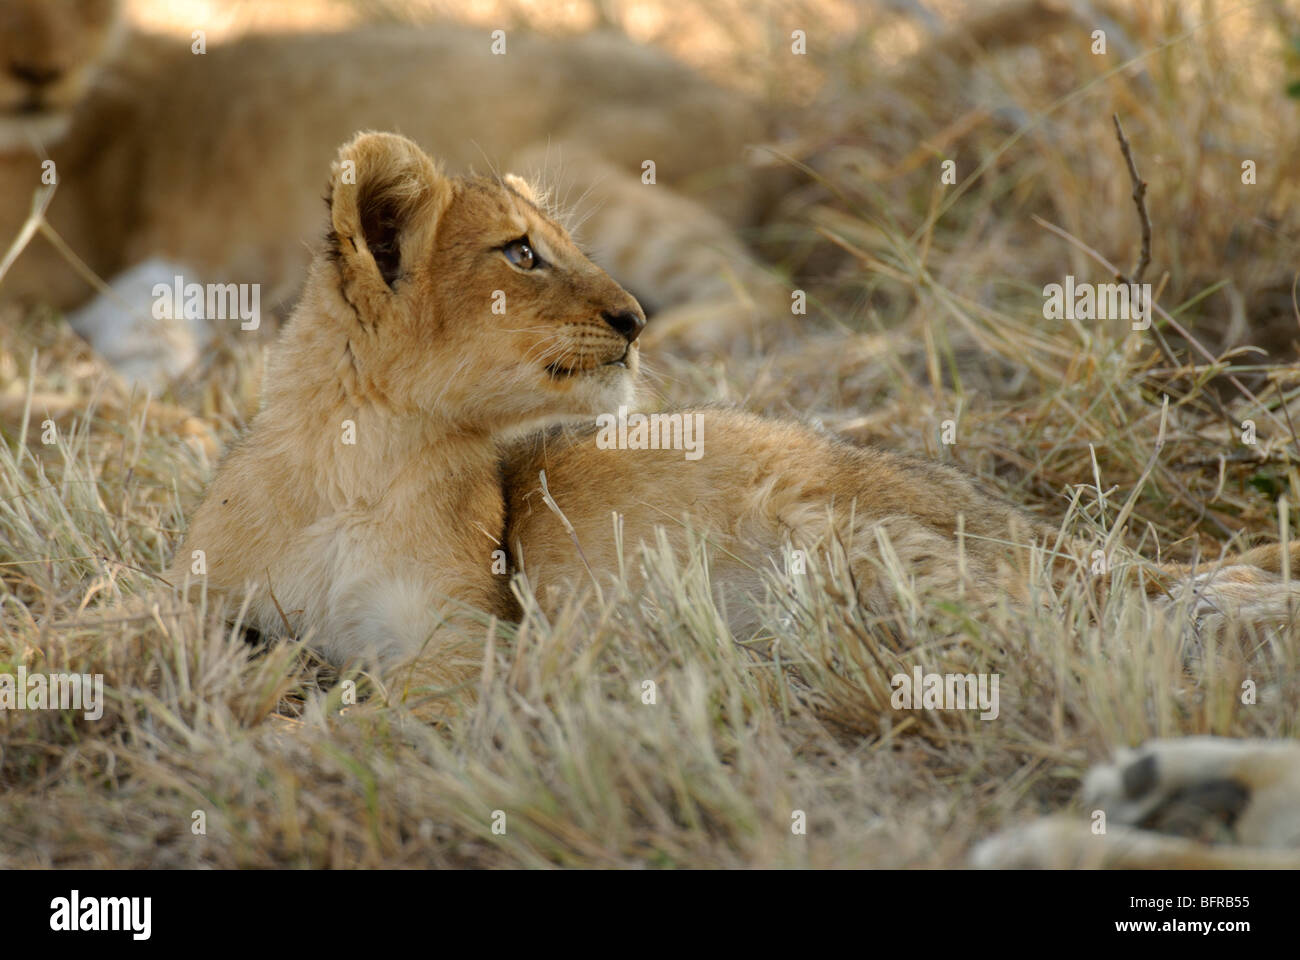 Cachorro de león descansando con orgullo mirando hacia arriba Foto de stock